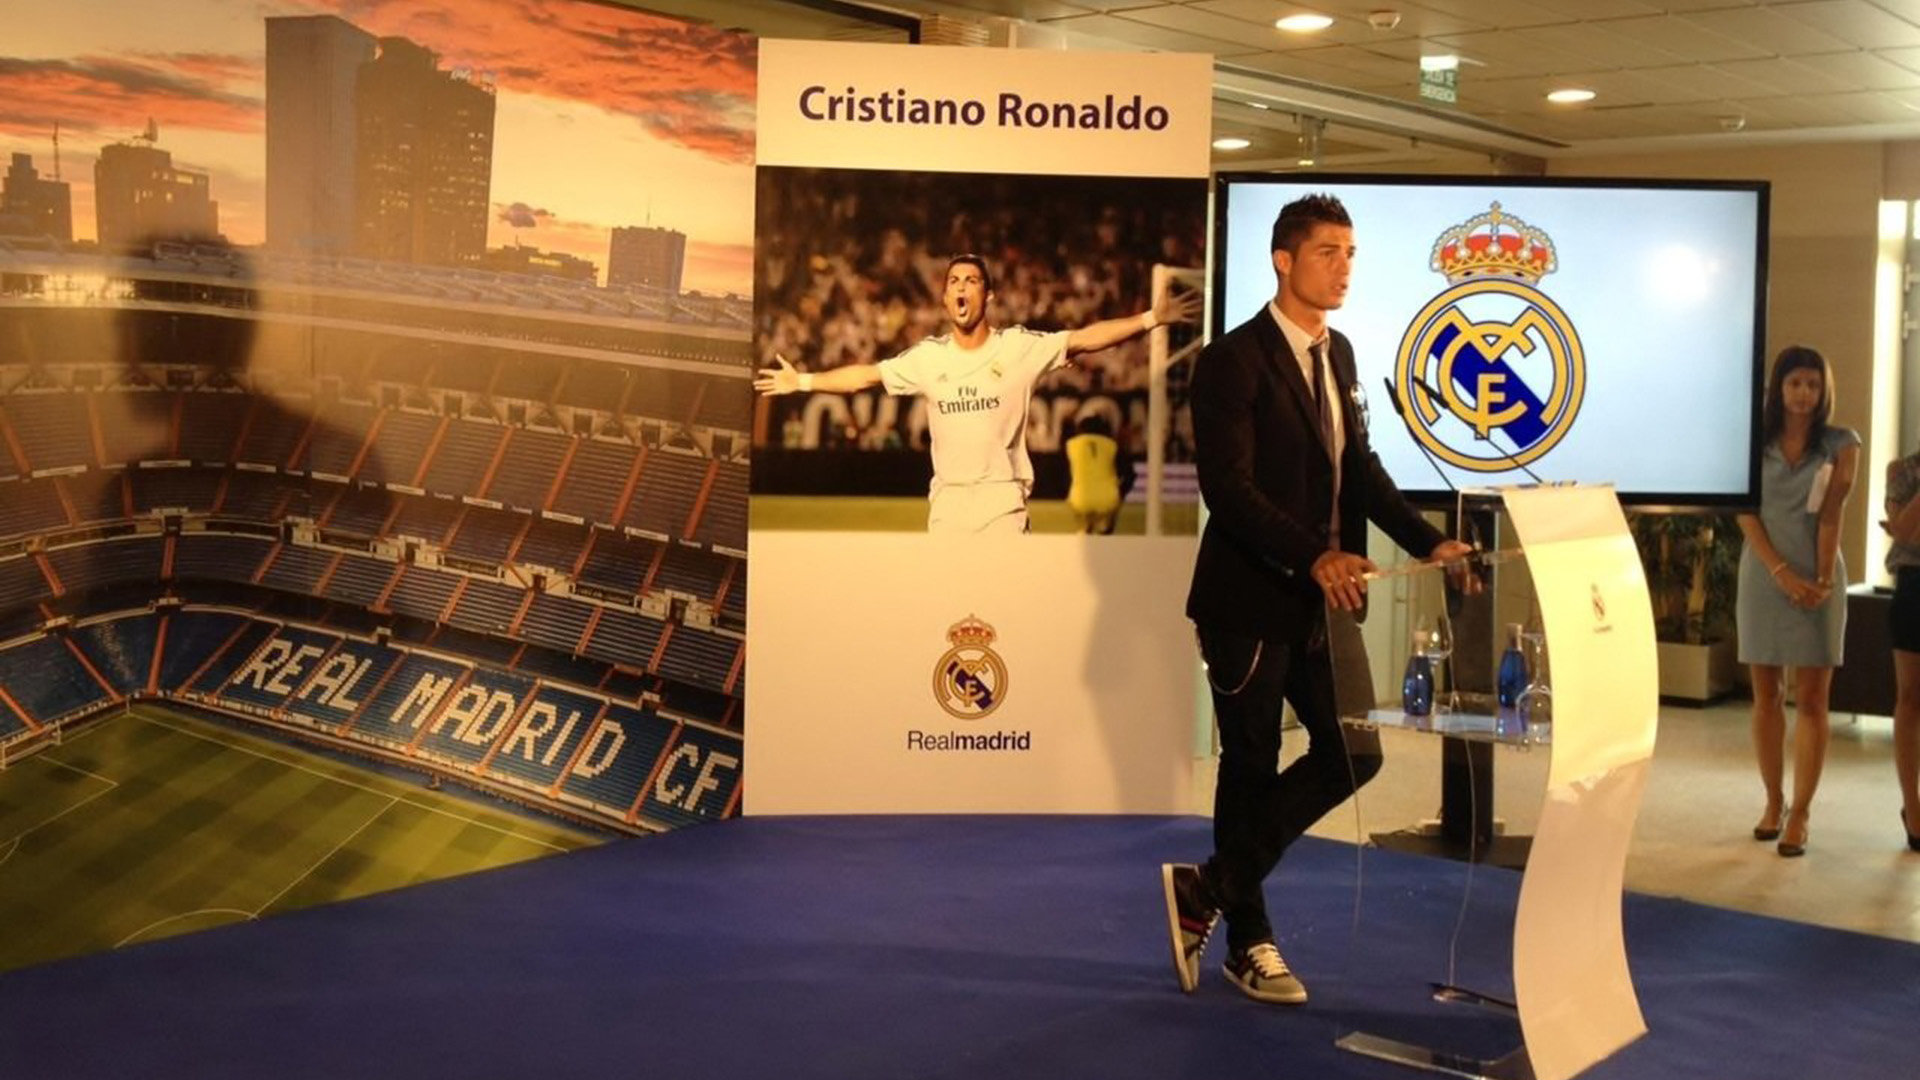 Best Cristiano Ronaldo (CR7) wallpaper ID:219709 for High Resolution hd 1080p desktop